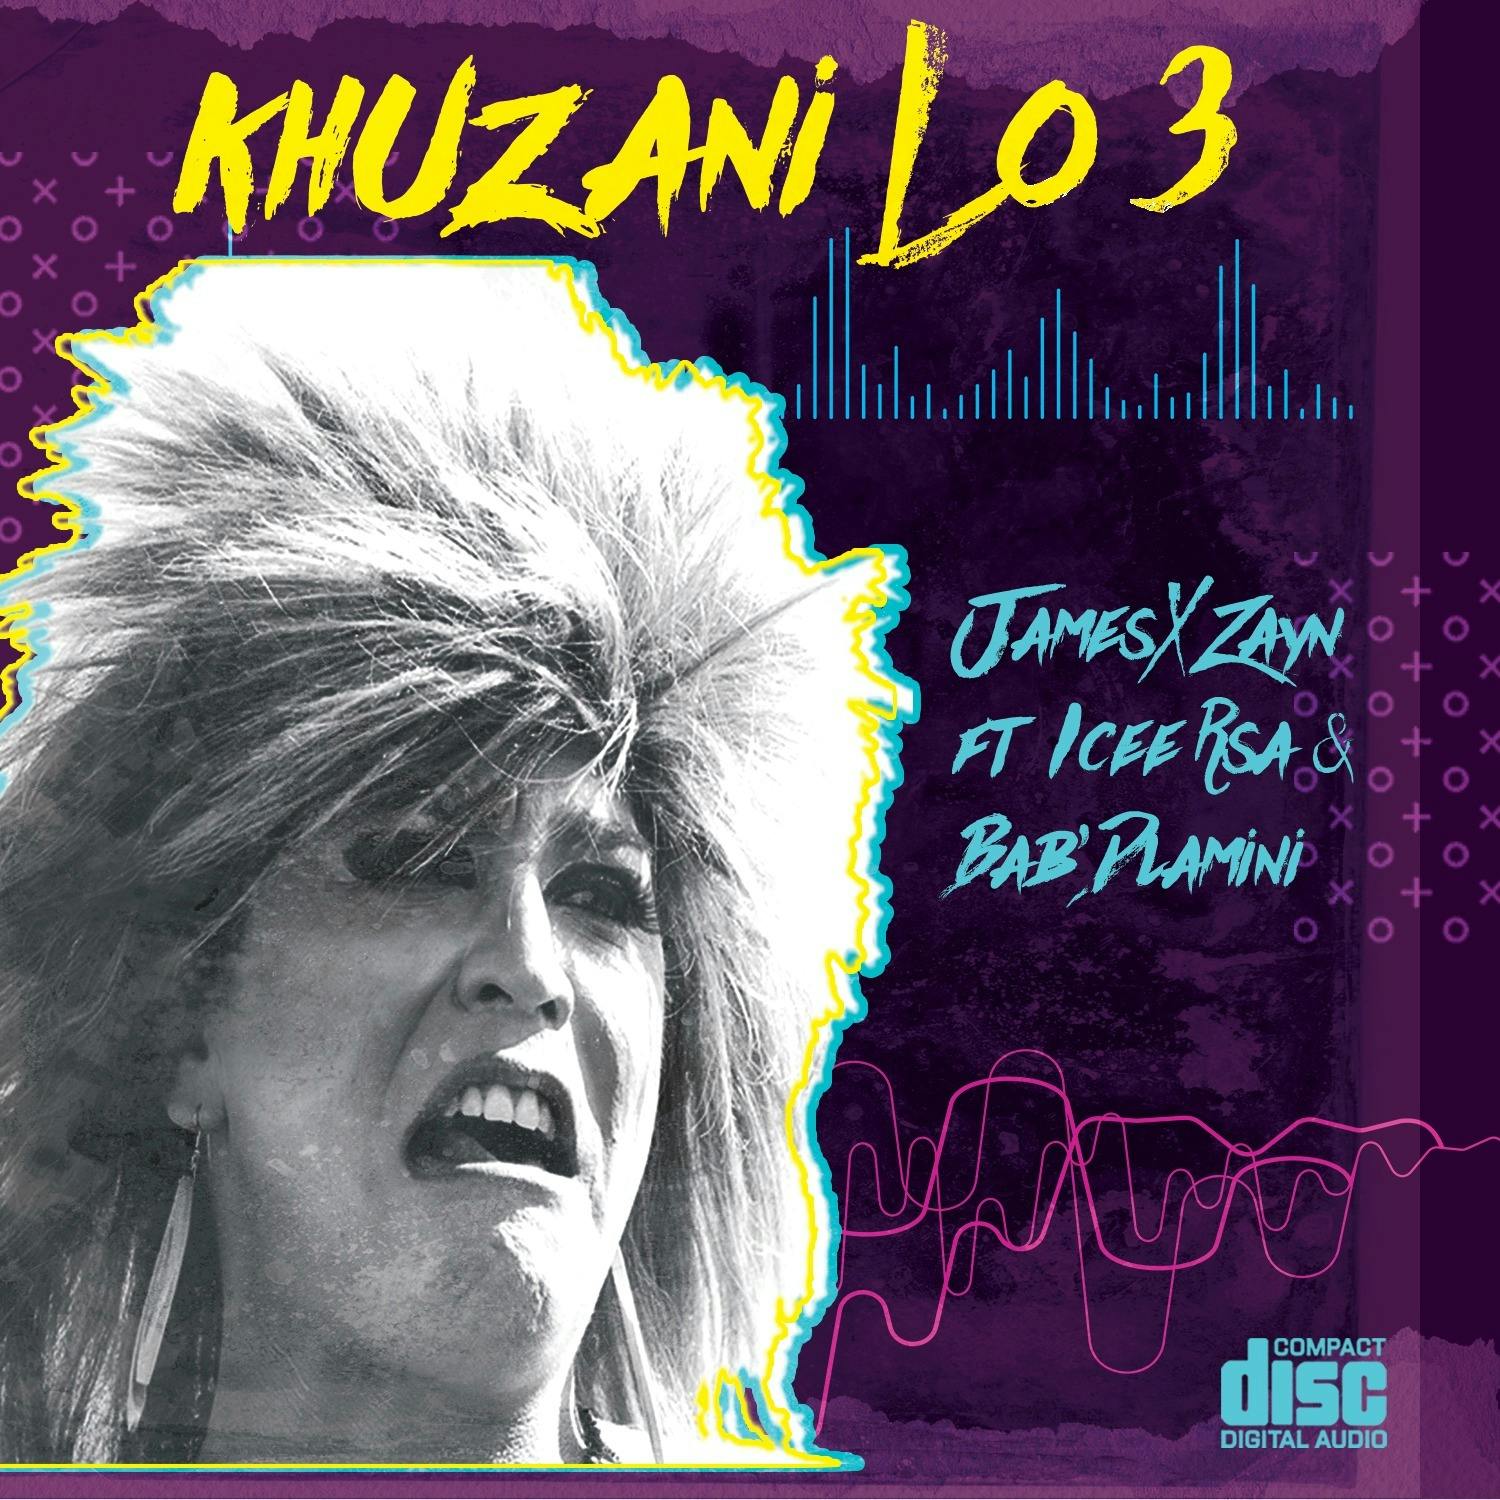 Khuzani Lo 3 (Feat. Icee RSA & Bab'Dlamini)